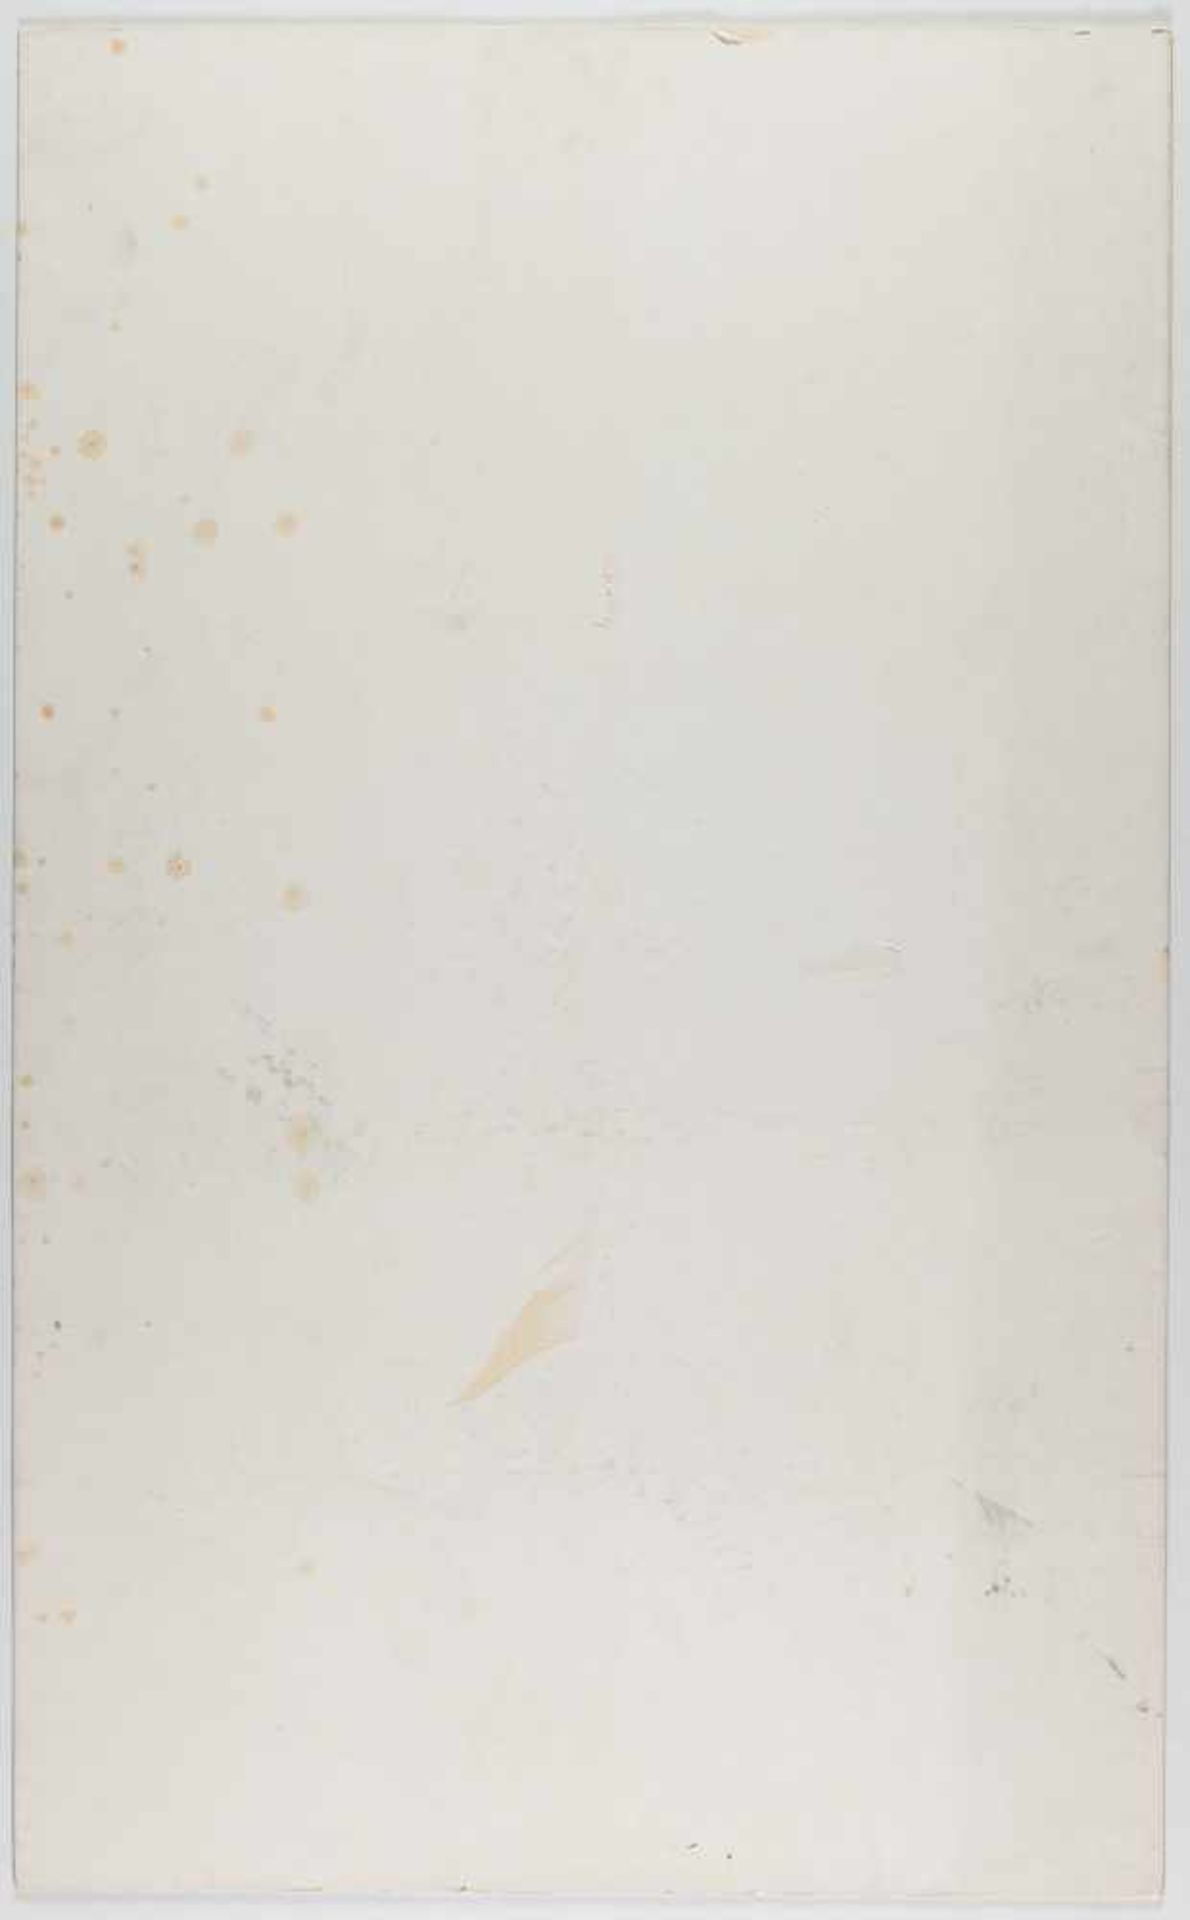 Heinz Mack Ohne Titel Silberne Sprühfarbe auf Karton. (19)63. Ca. 91,5 x 56,5 cm (blattgroß). - Image 3 of 3